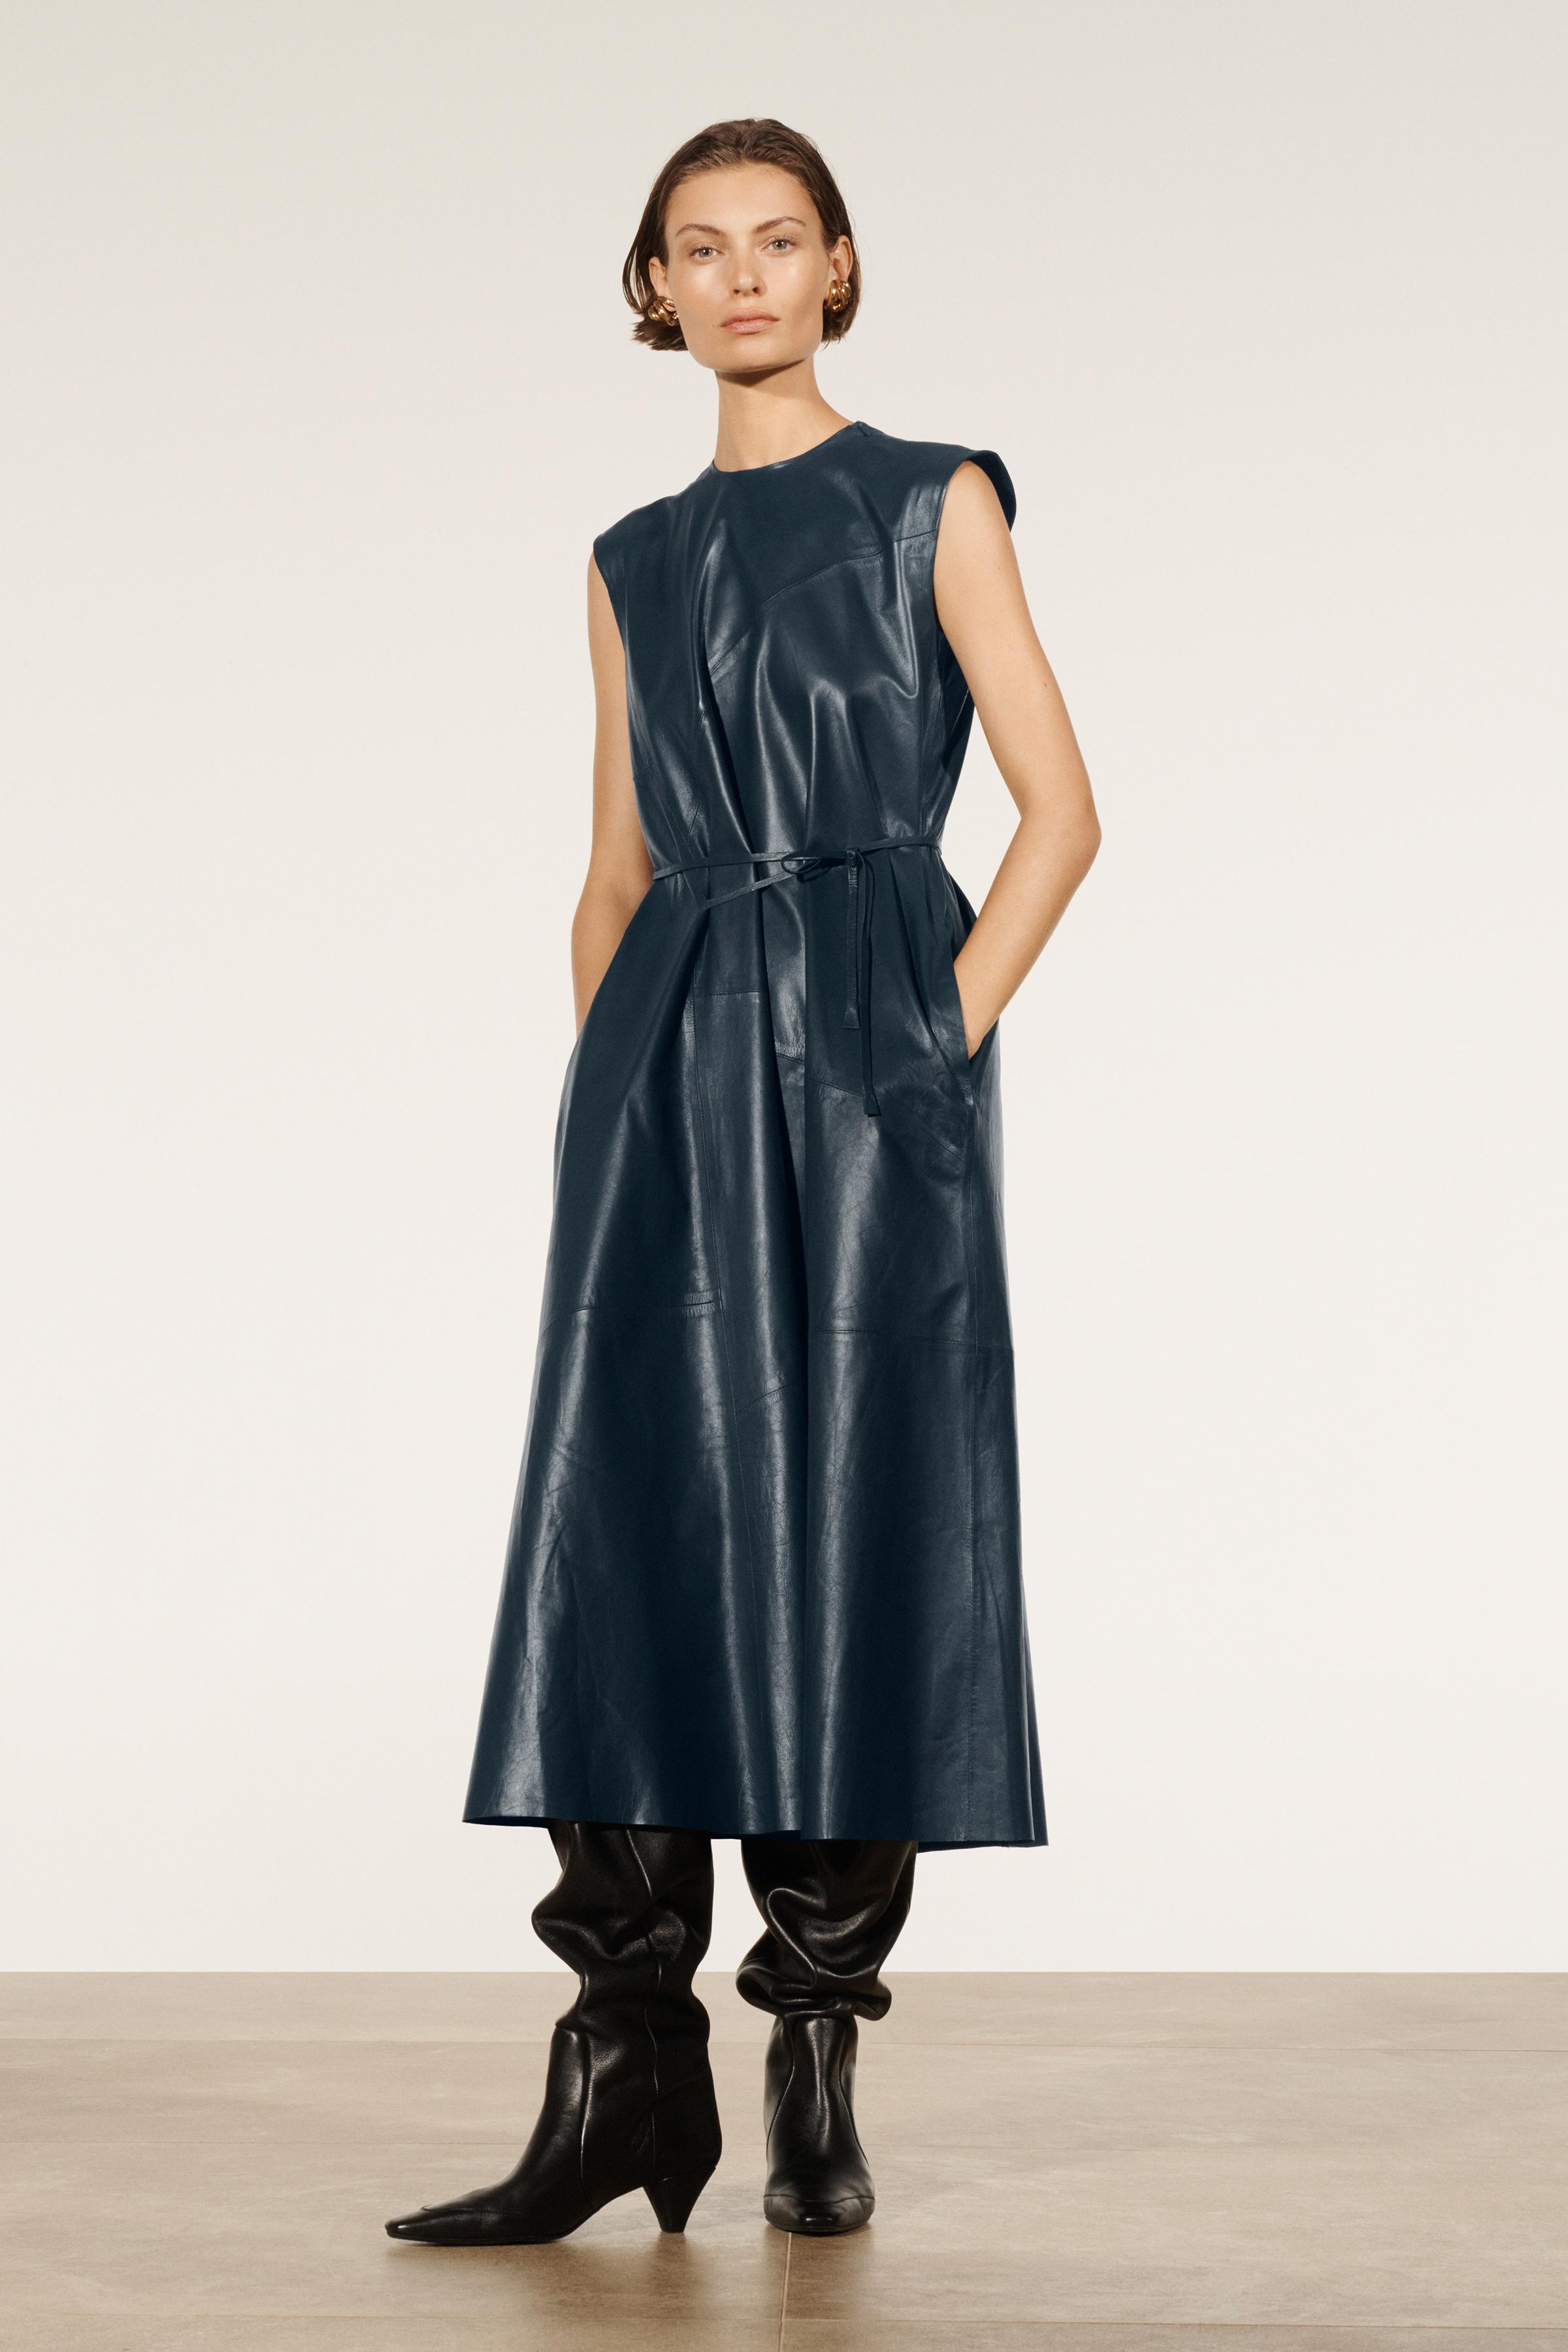 Women's Leather Dresses, Explore our New Arrivals